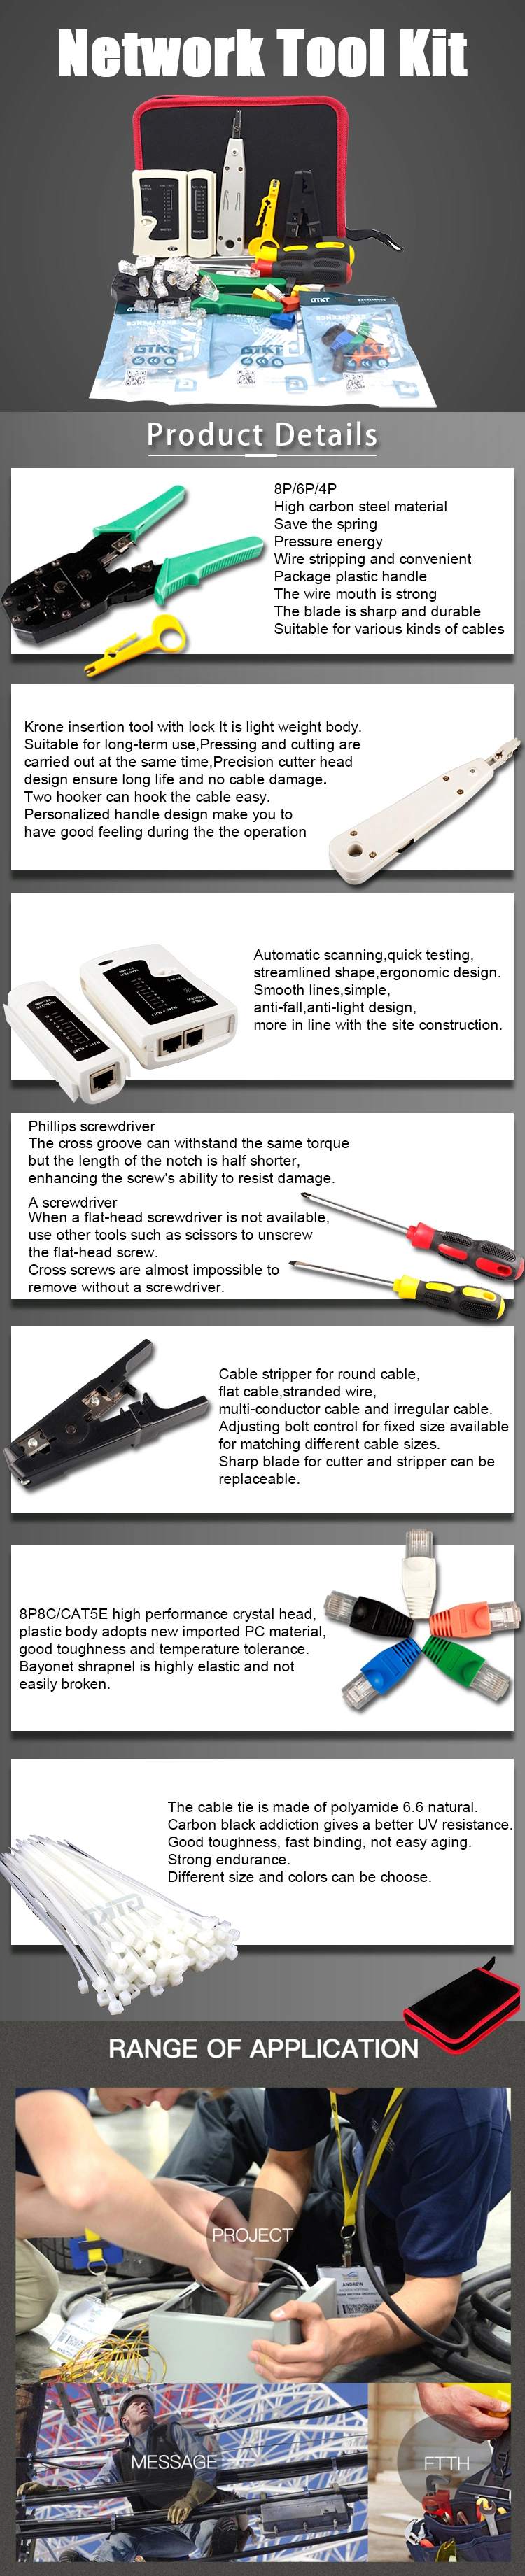 Gcabling LAN Tester Krone Insertion Tool Hand Crimping RJ45 Connector Network Tool Kit